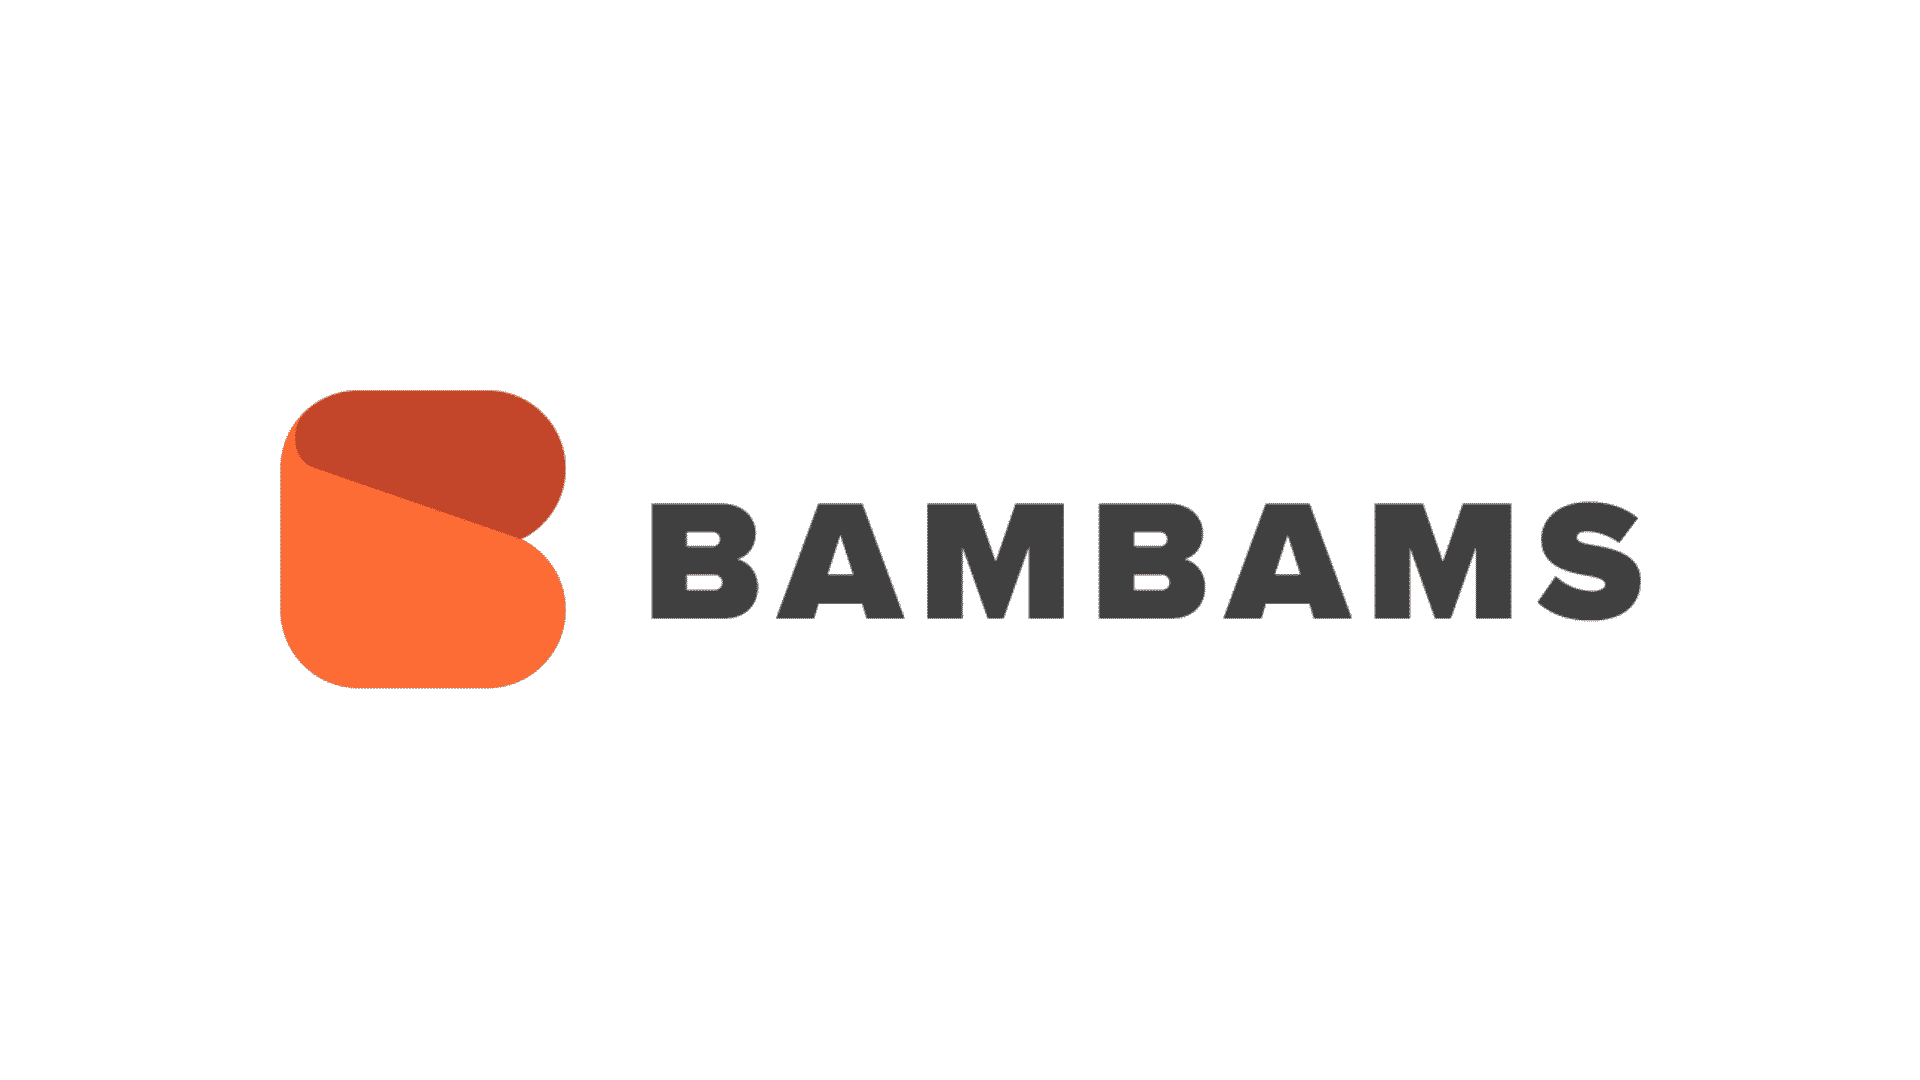 Chief Marketing Officer & VP Business Development at BamBams